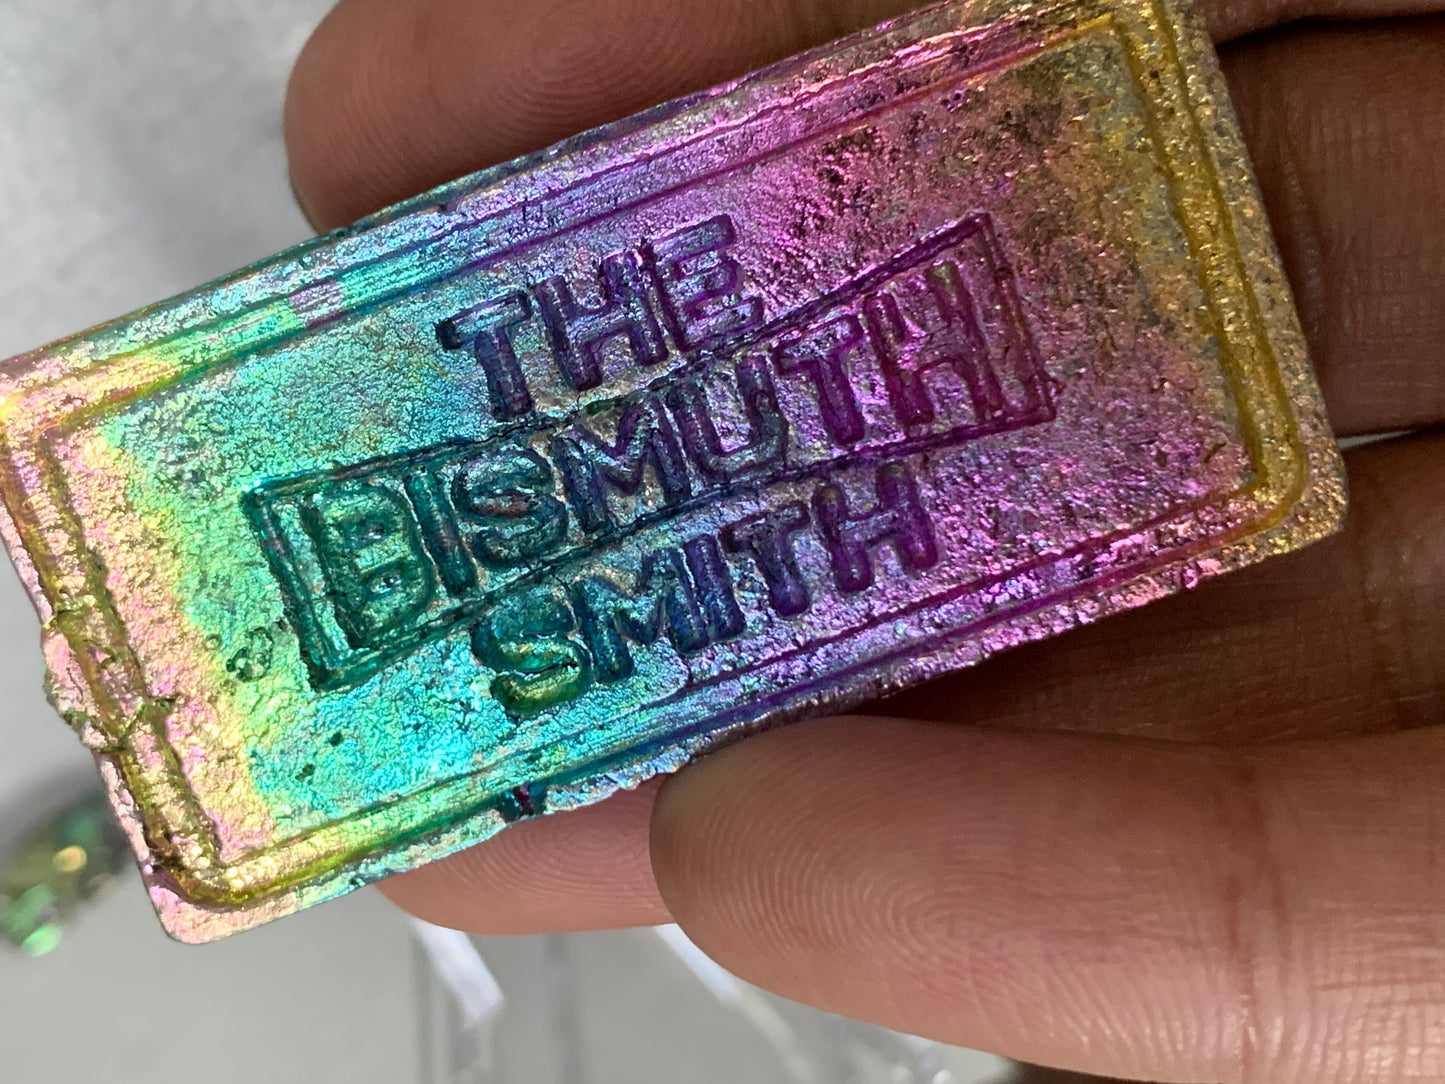 Rainbow Bismuth Crystal Sculpture - Bullion Ingot Bar